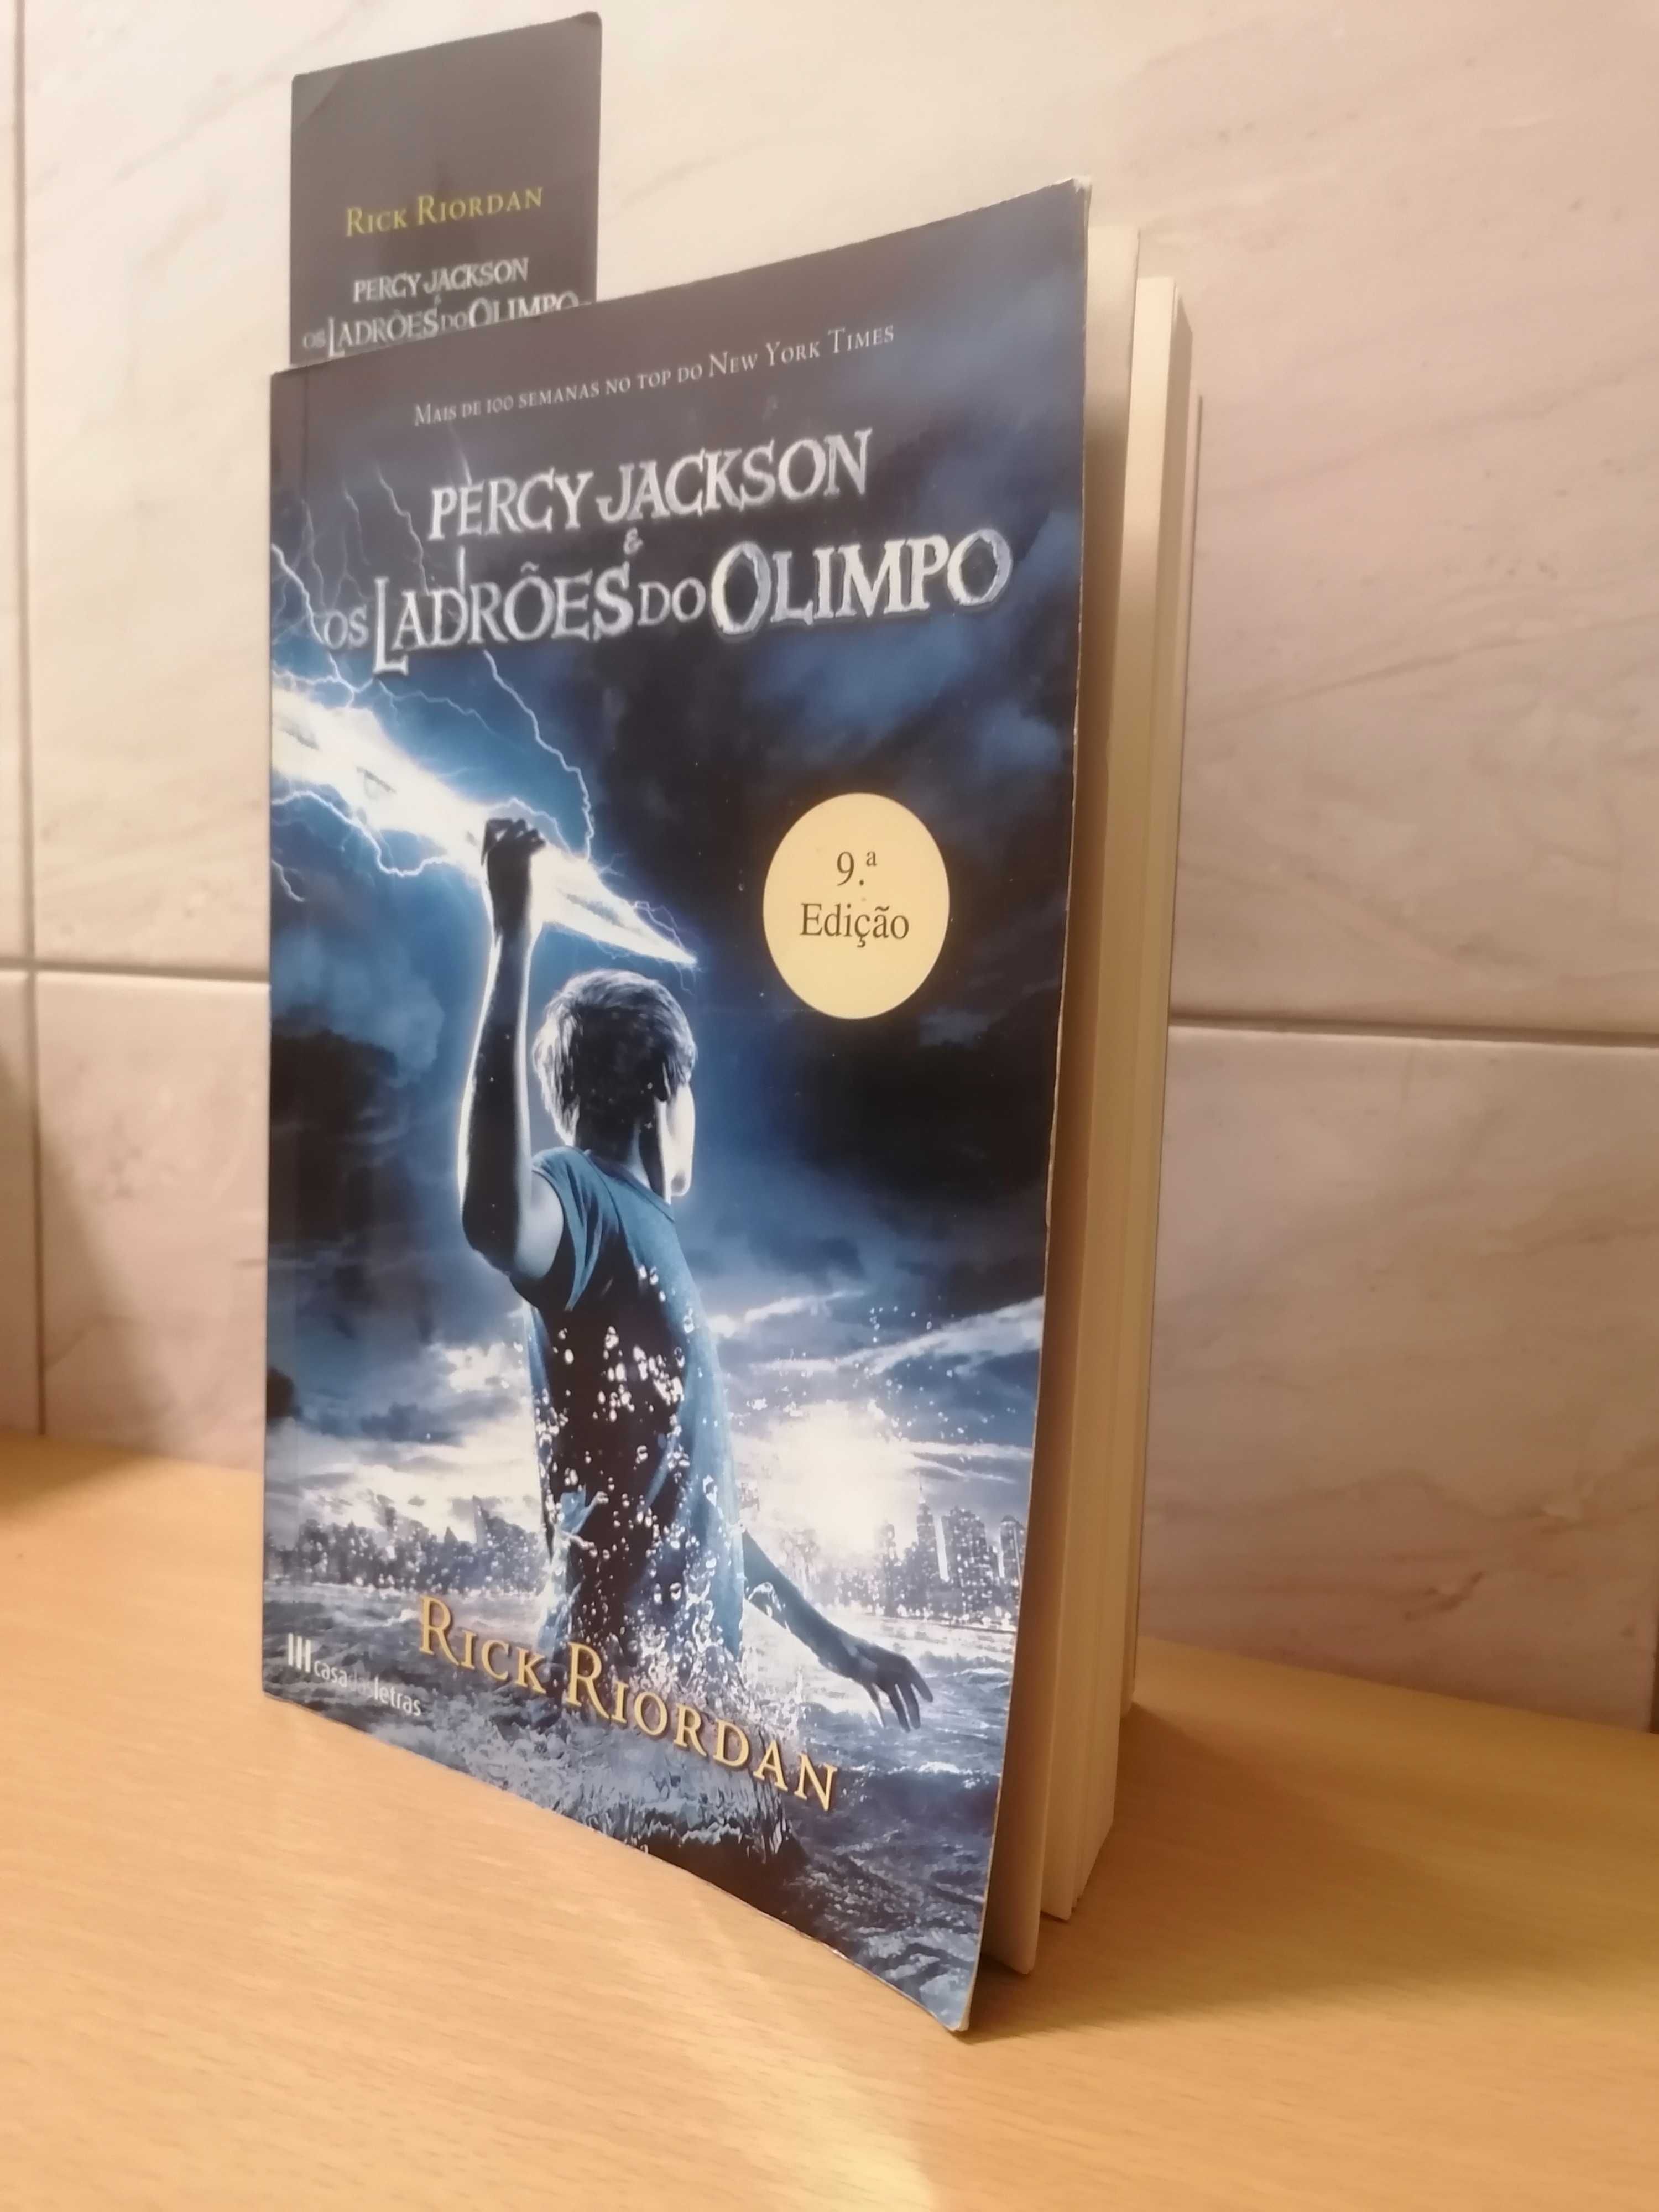 Livro "Percy Jackson os ladrões do olimpo"